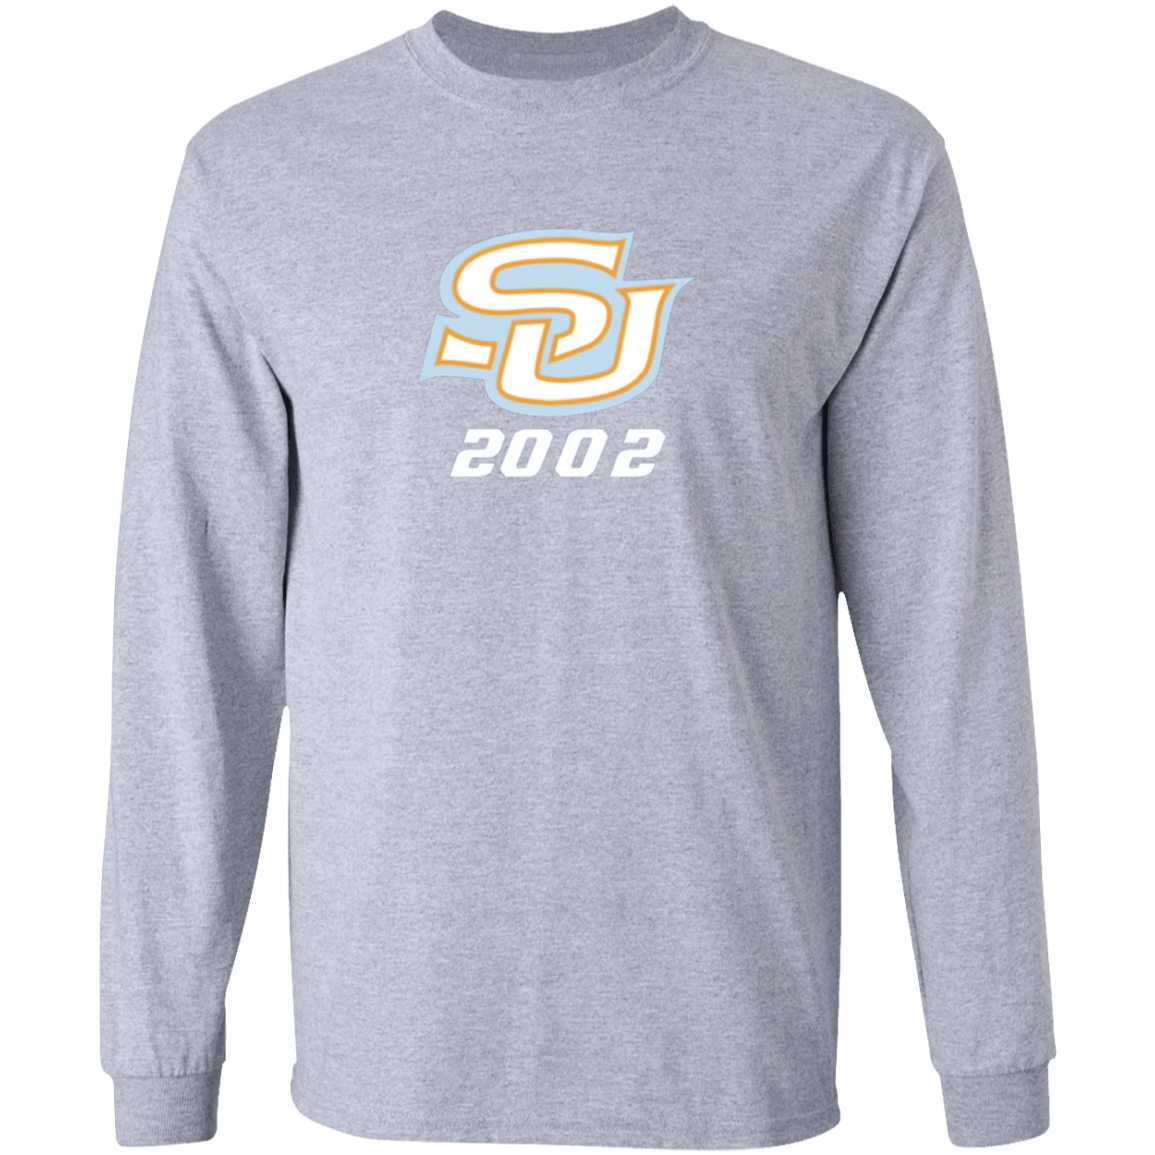 SU c/o 2002 G240 LS Ultra Cotton T-Shirt